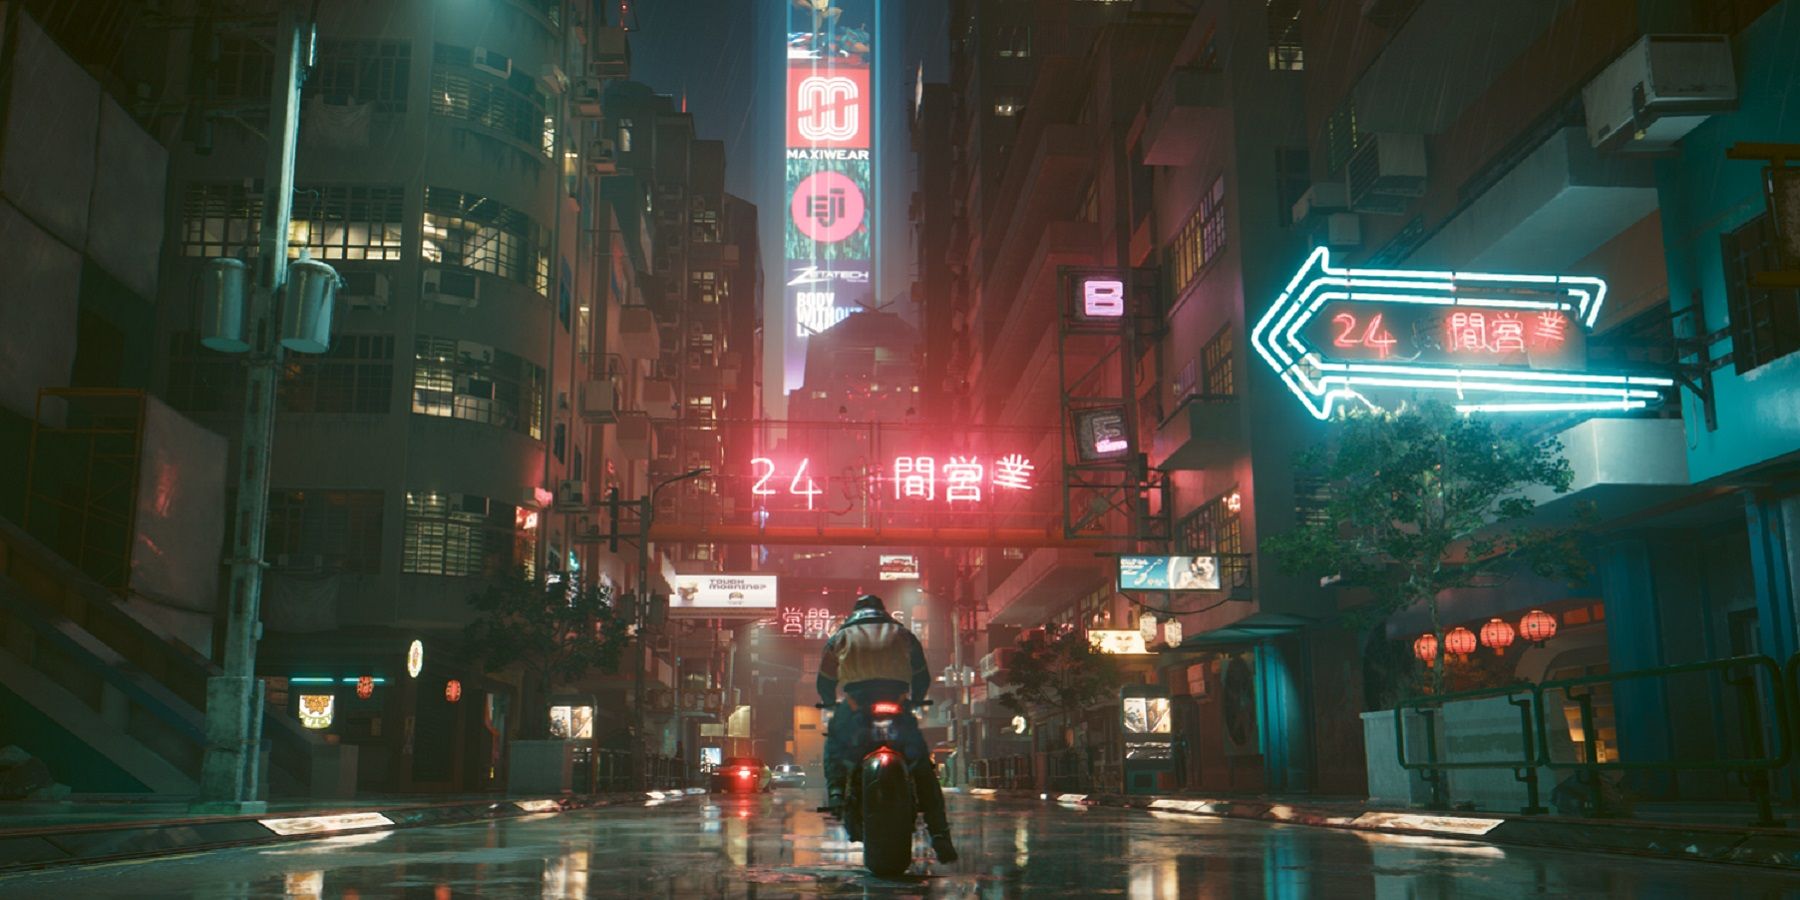 Image from Cyberpunk 2077 showing a motorcyclist in a dark, neon street in Night City.